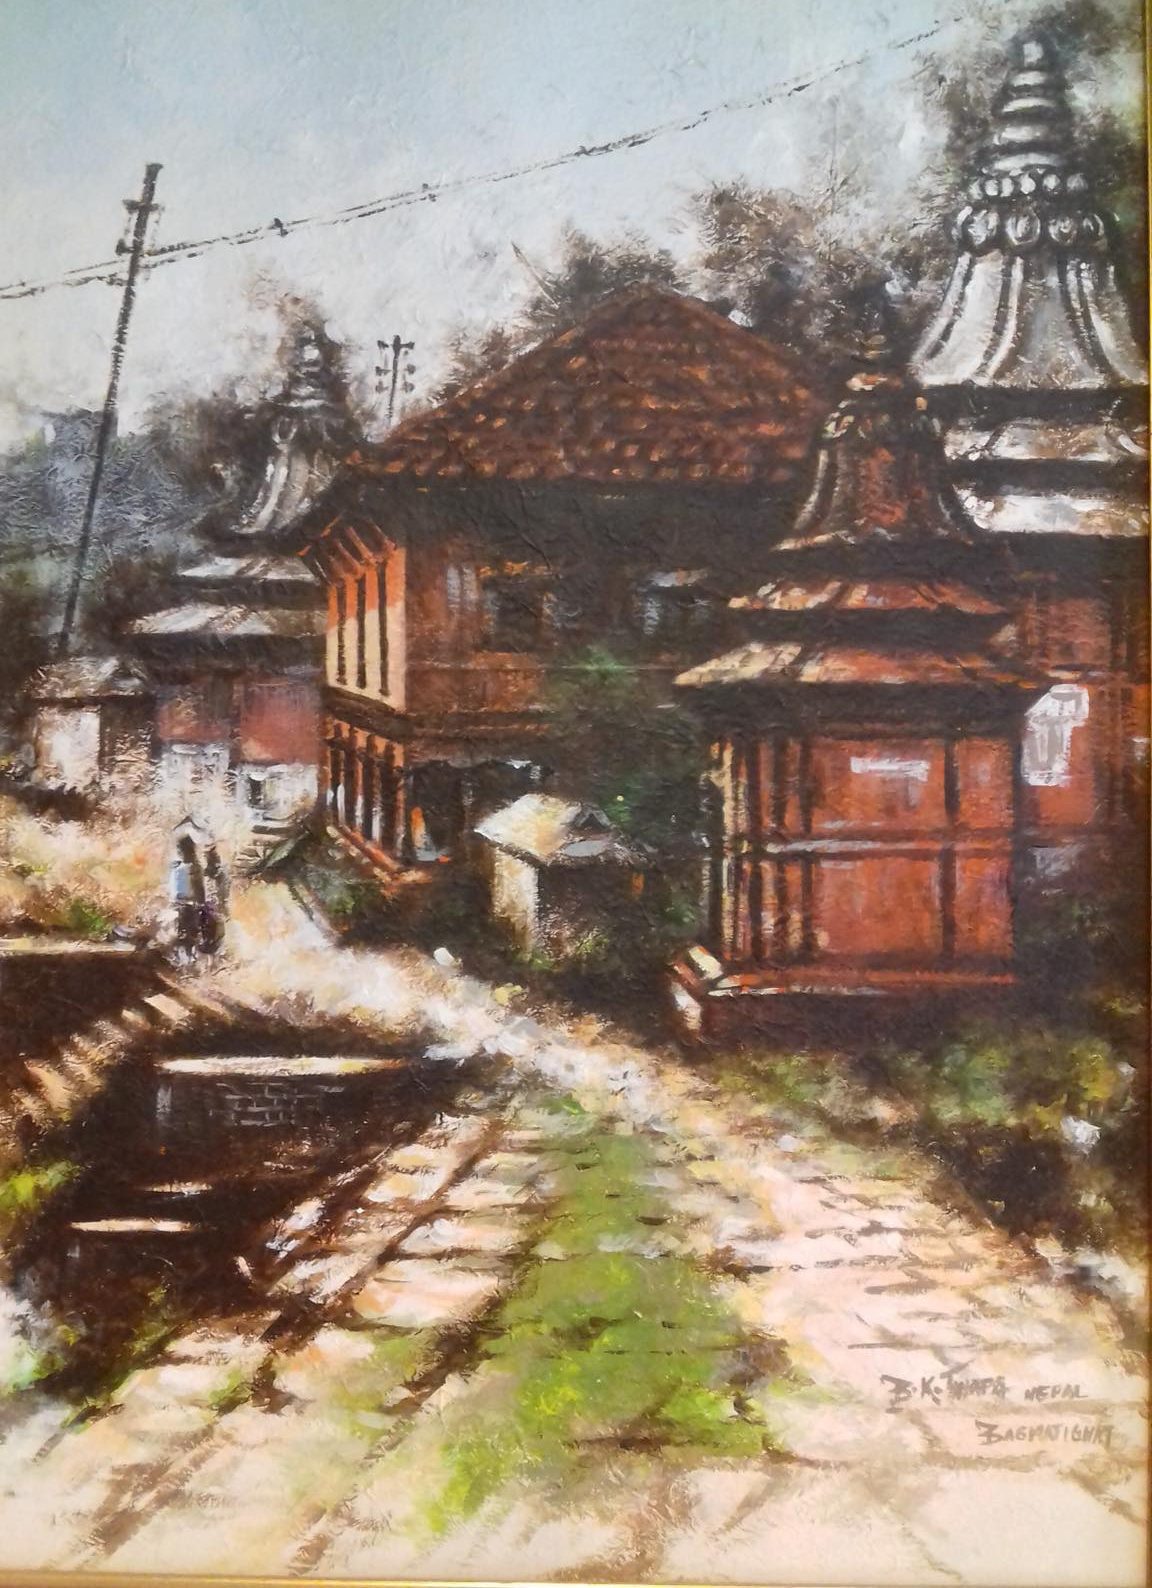 Painting of Nepal